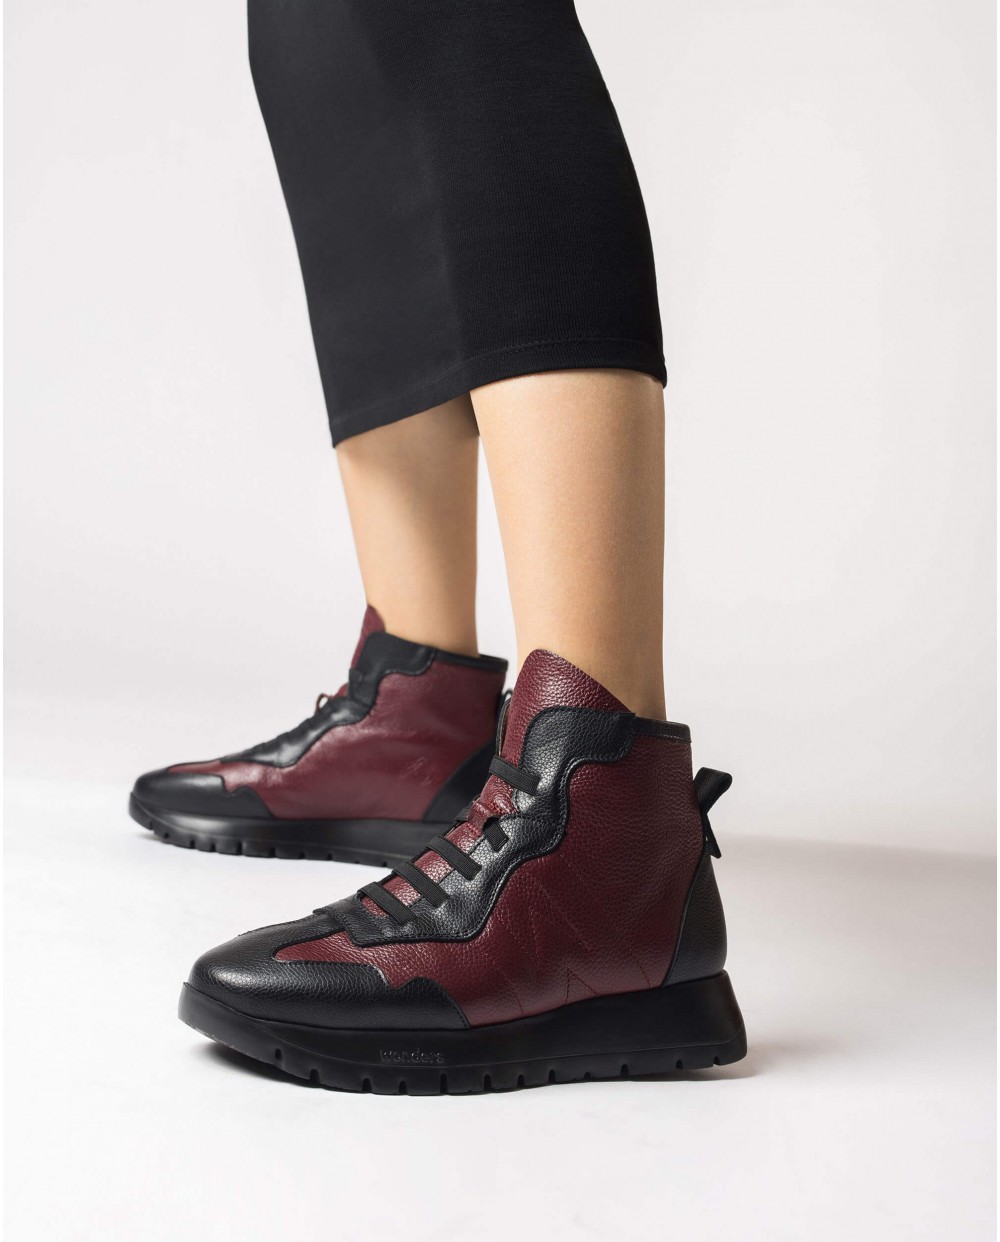 Wonders-Sneakers-England bordeaux ankle boot